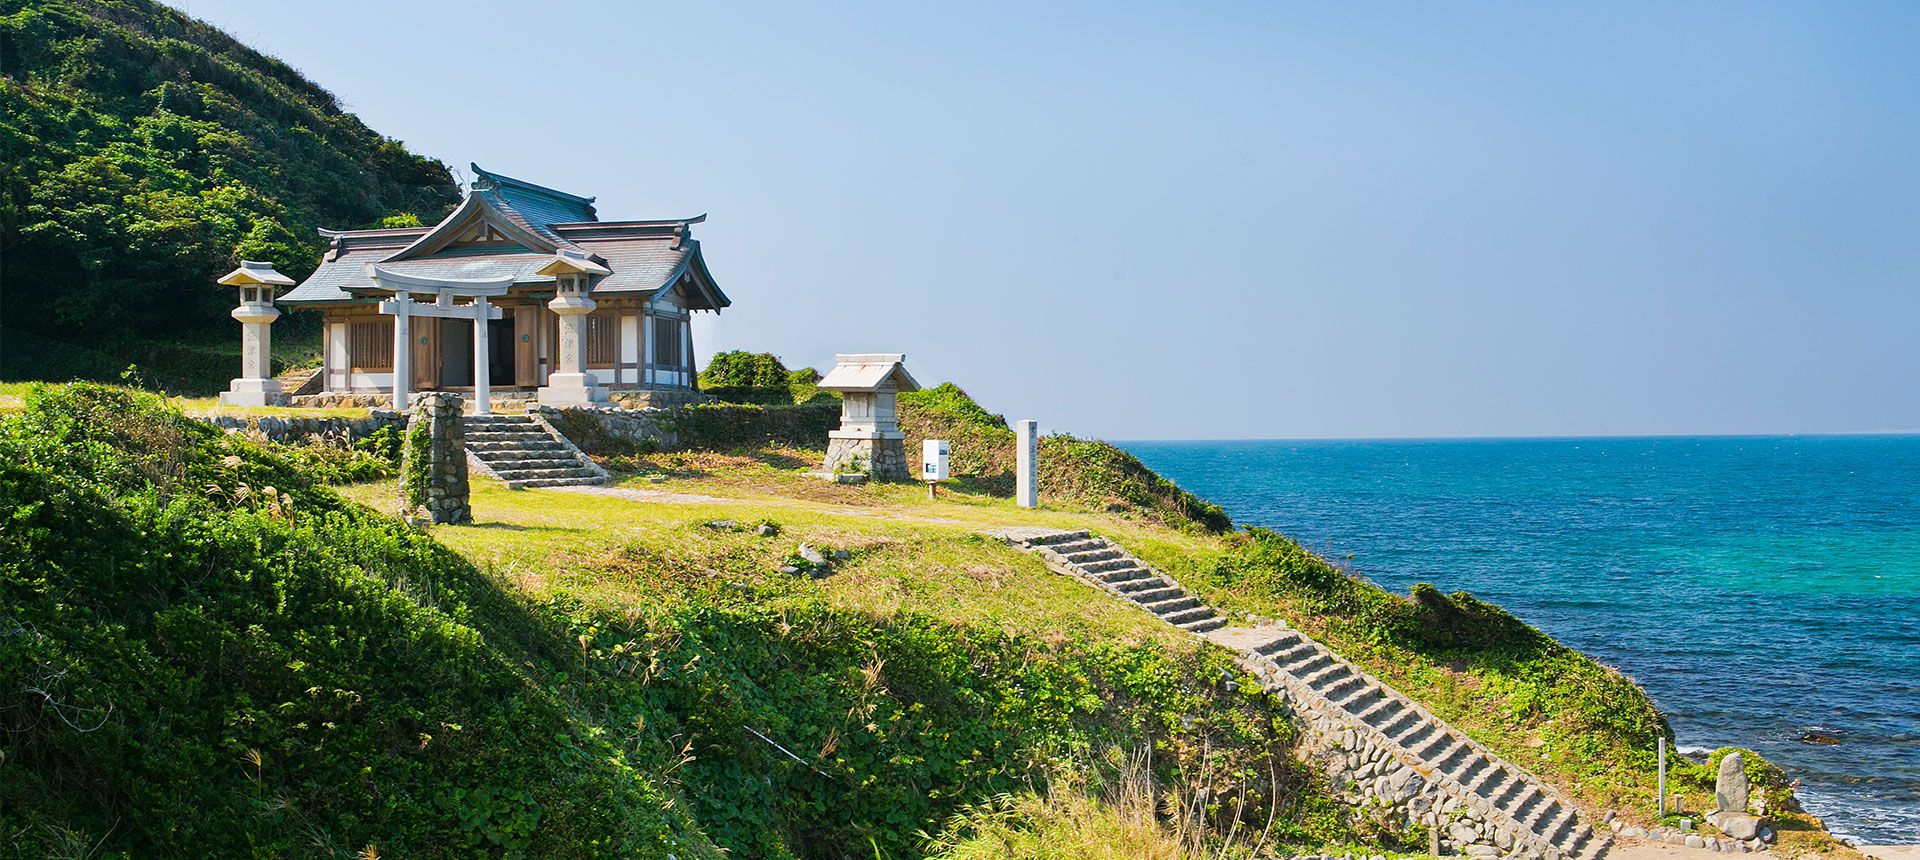 Okinoshima Island